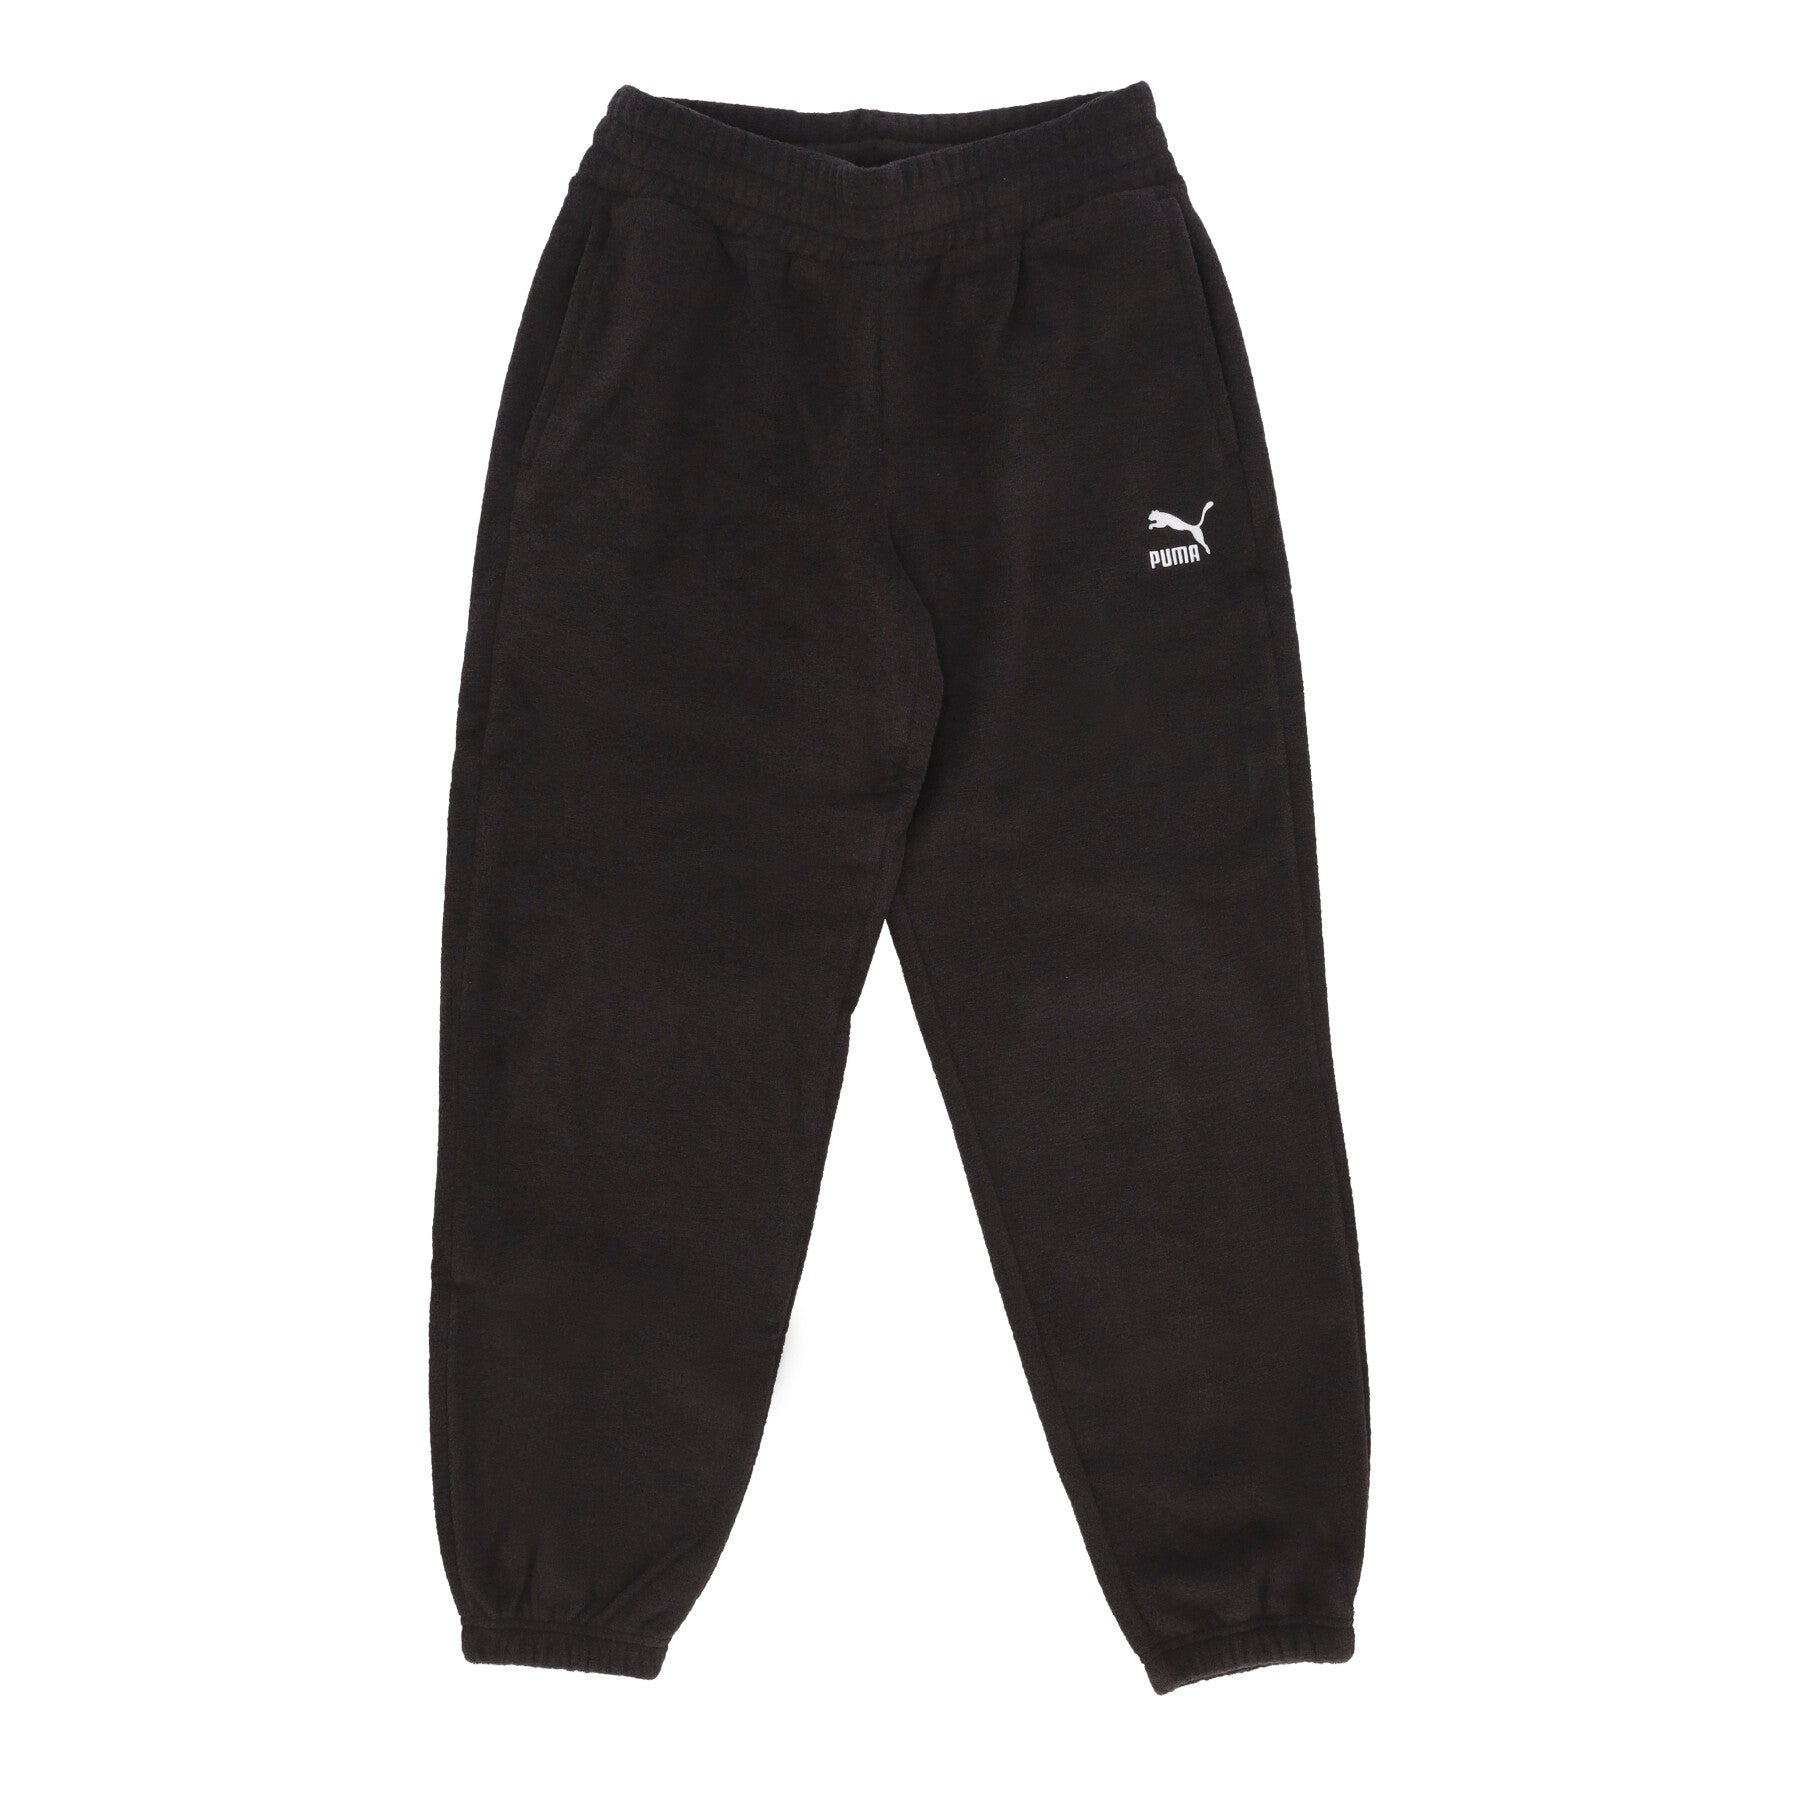 Puma, Pantalone Tuta Felpato Donna W Classics Fleece Sweatpants, Black